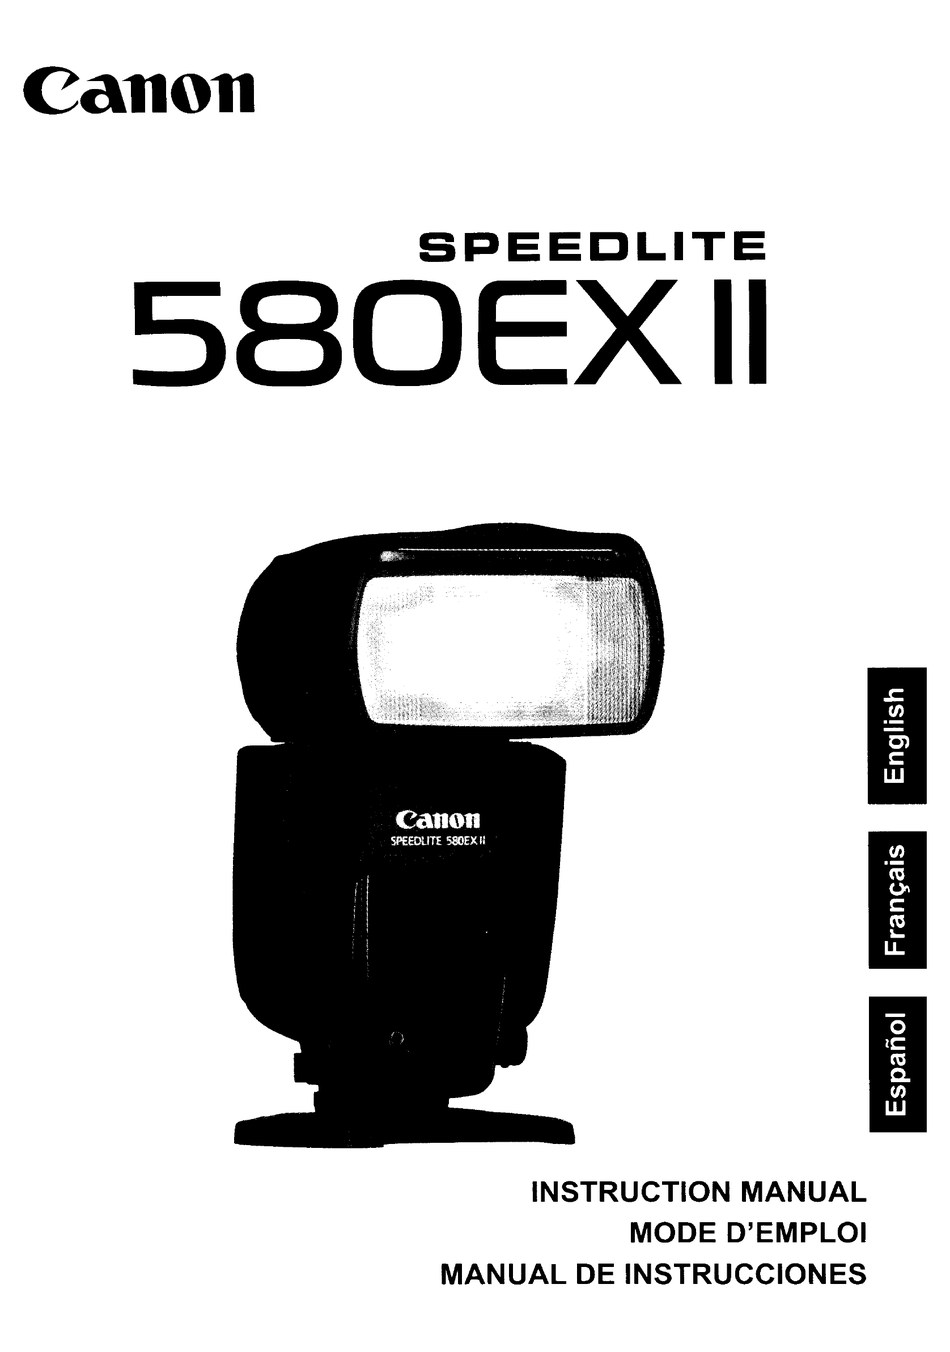 Canon Speedlite 550EX Instruction manual English. 